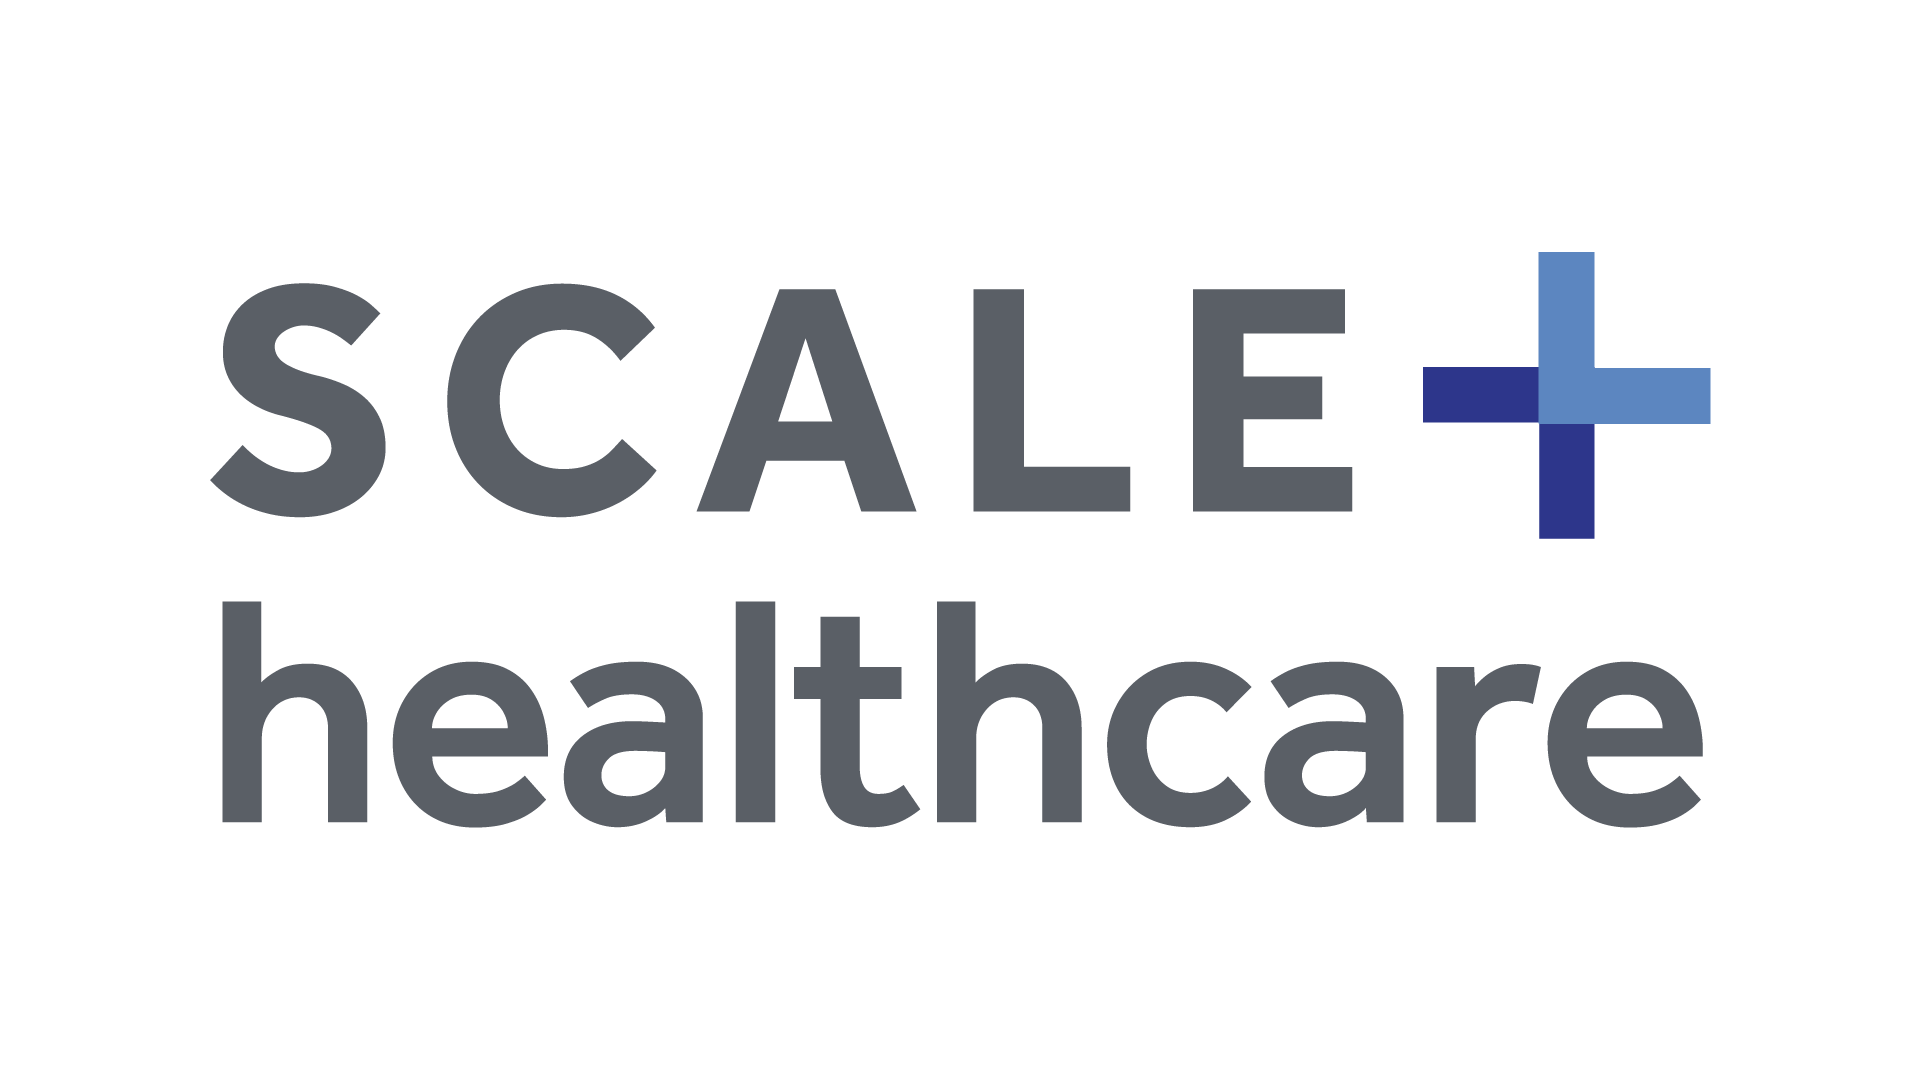 SCALE Healthcare Receives Award for Best Online Health Education Platform 